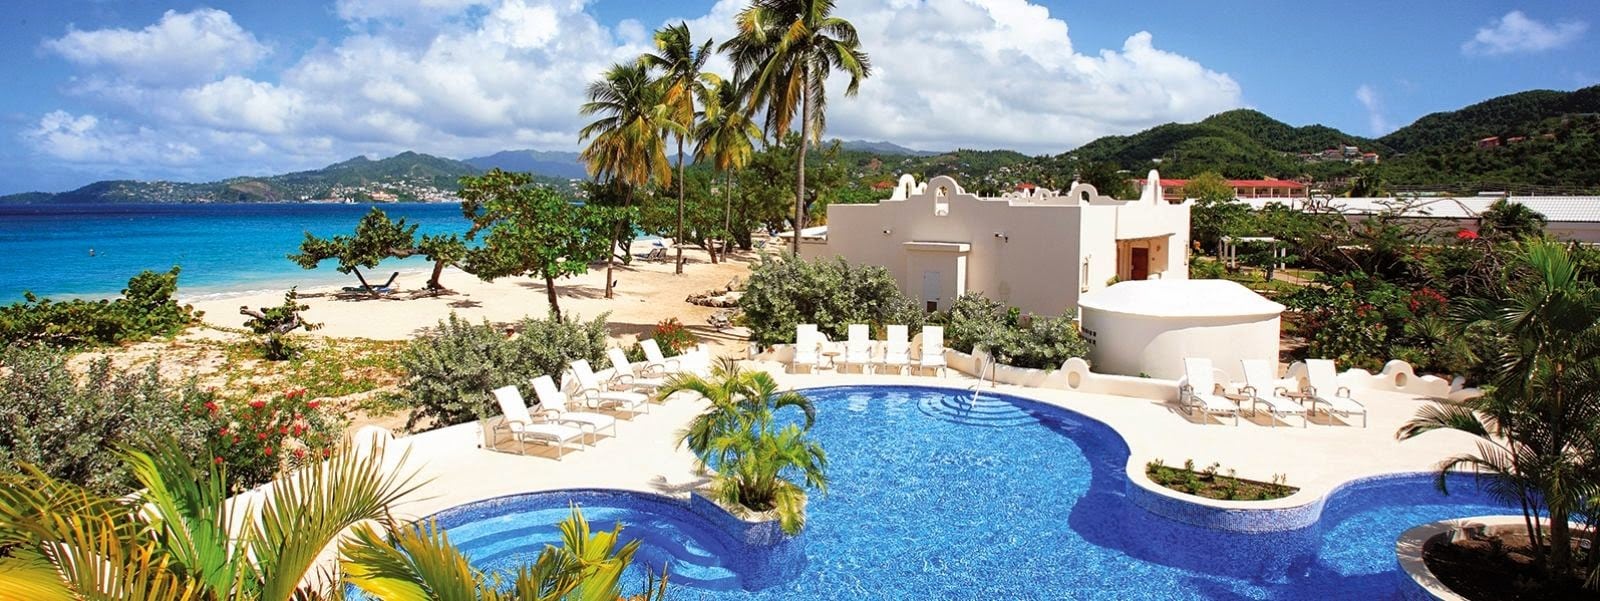 Spice Island Beach Resort, Grenada 